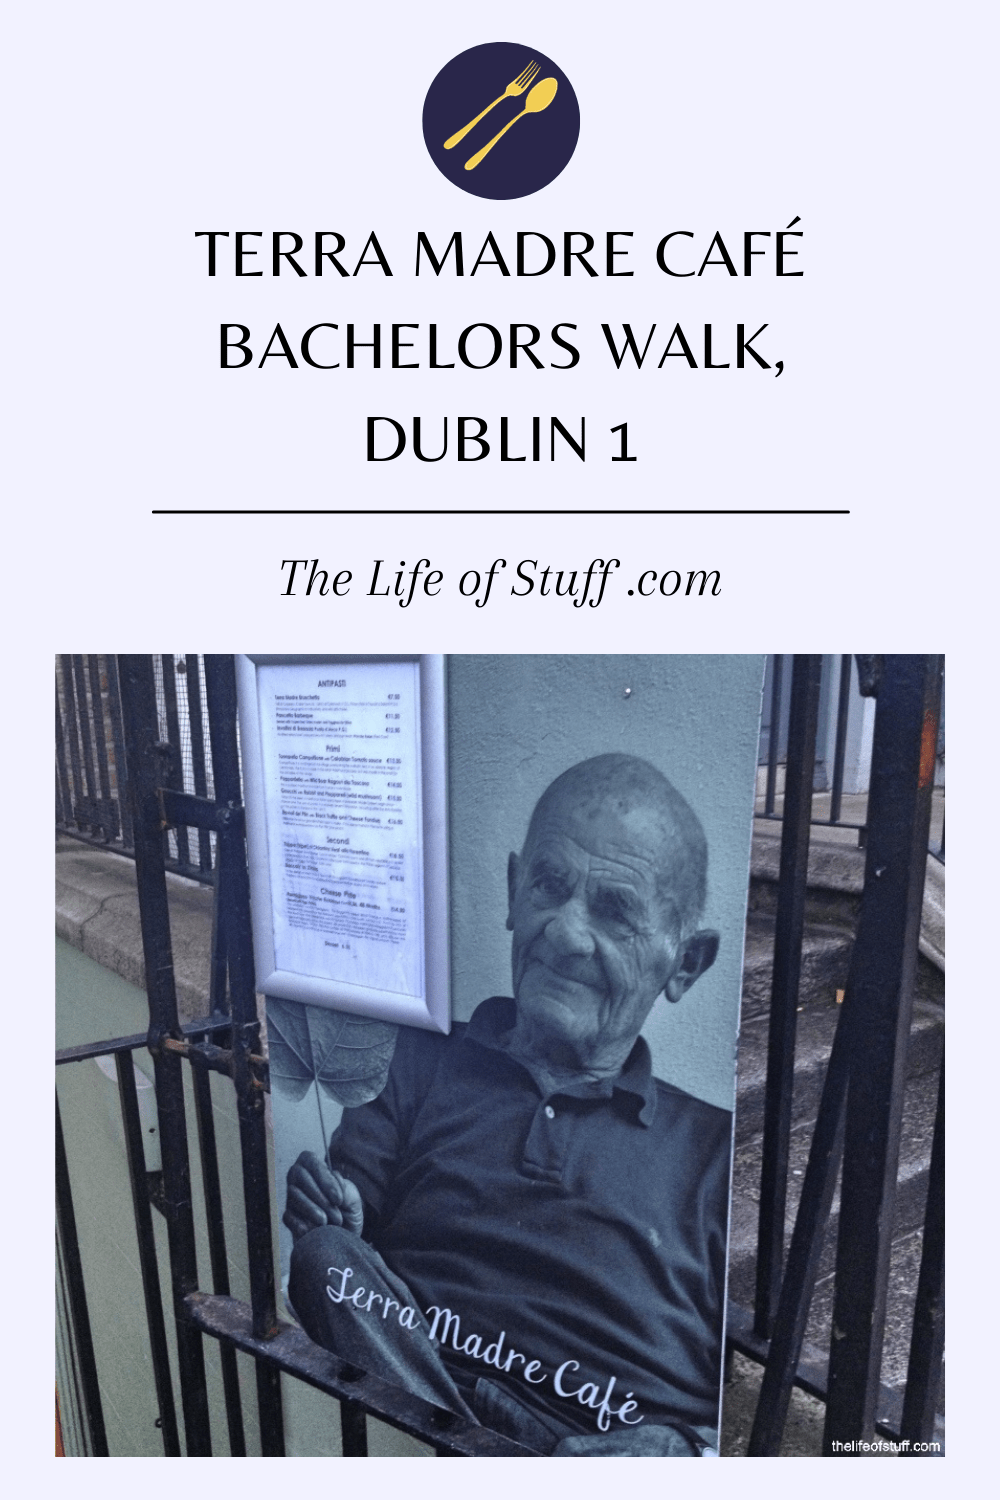 Terra Madre Cafe, 13a Bachelors Walk, Dublin 1 - The Life of Stuff